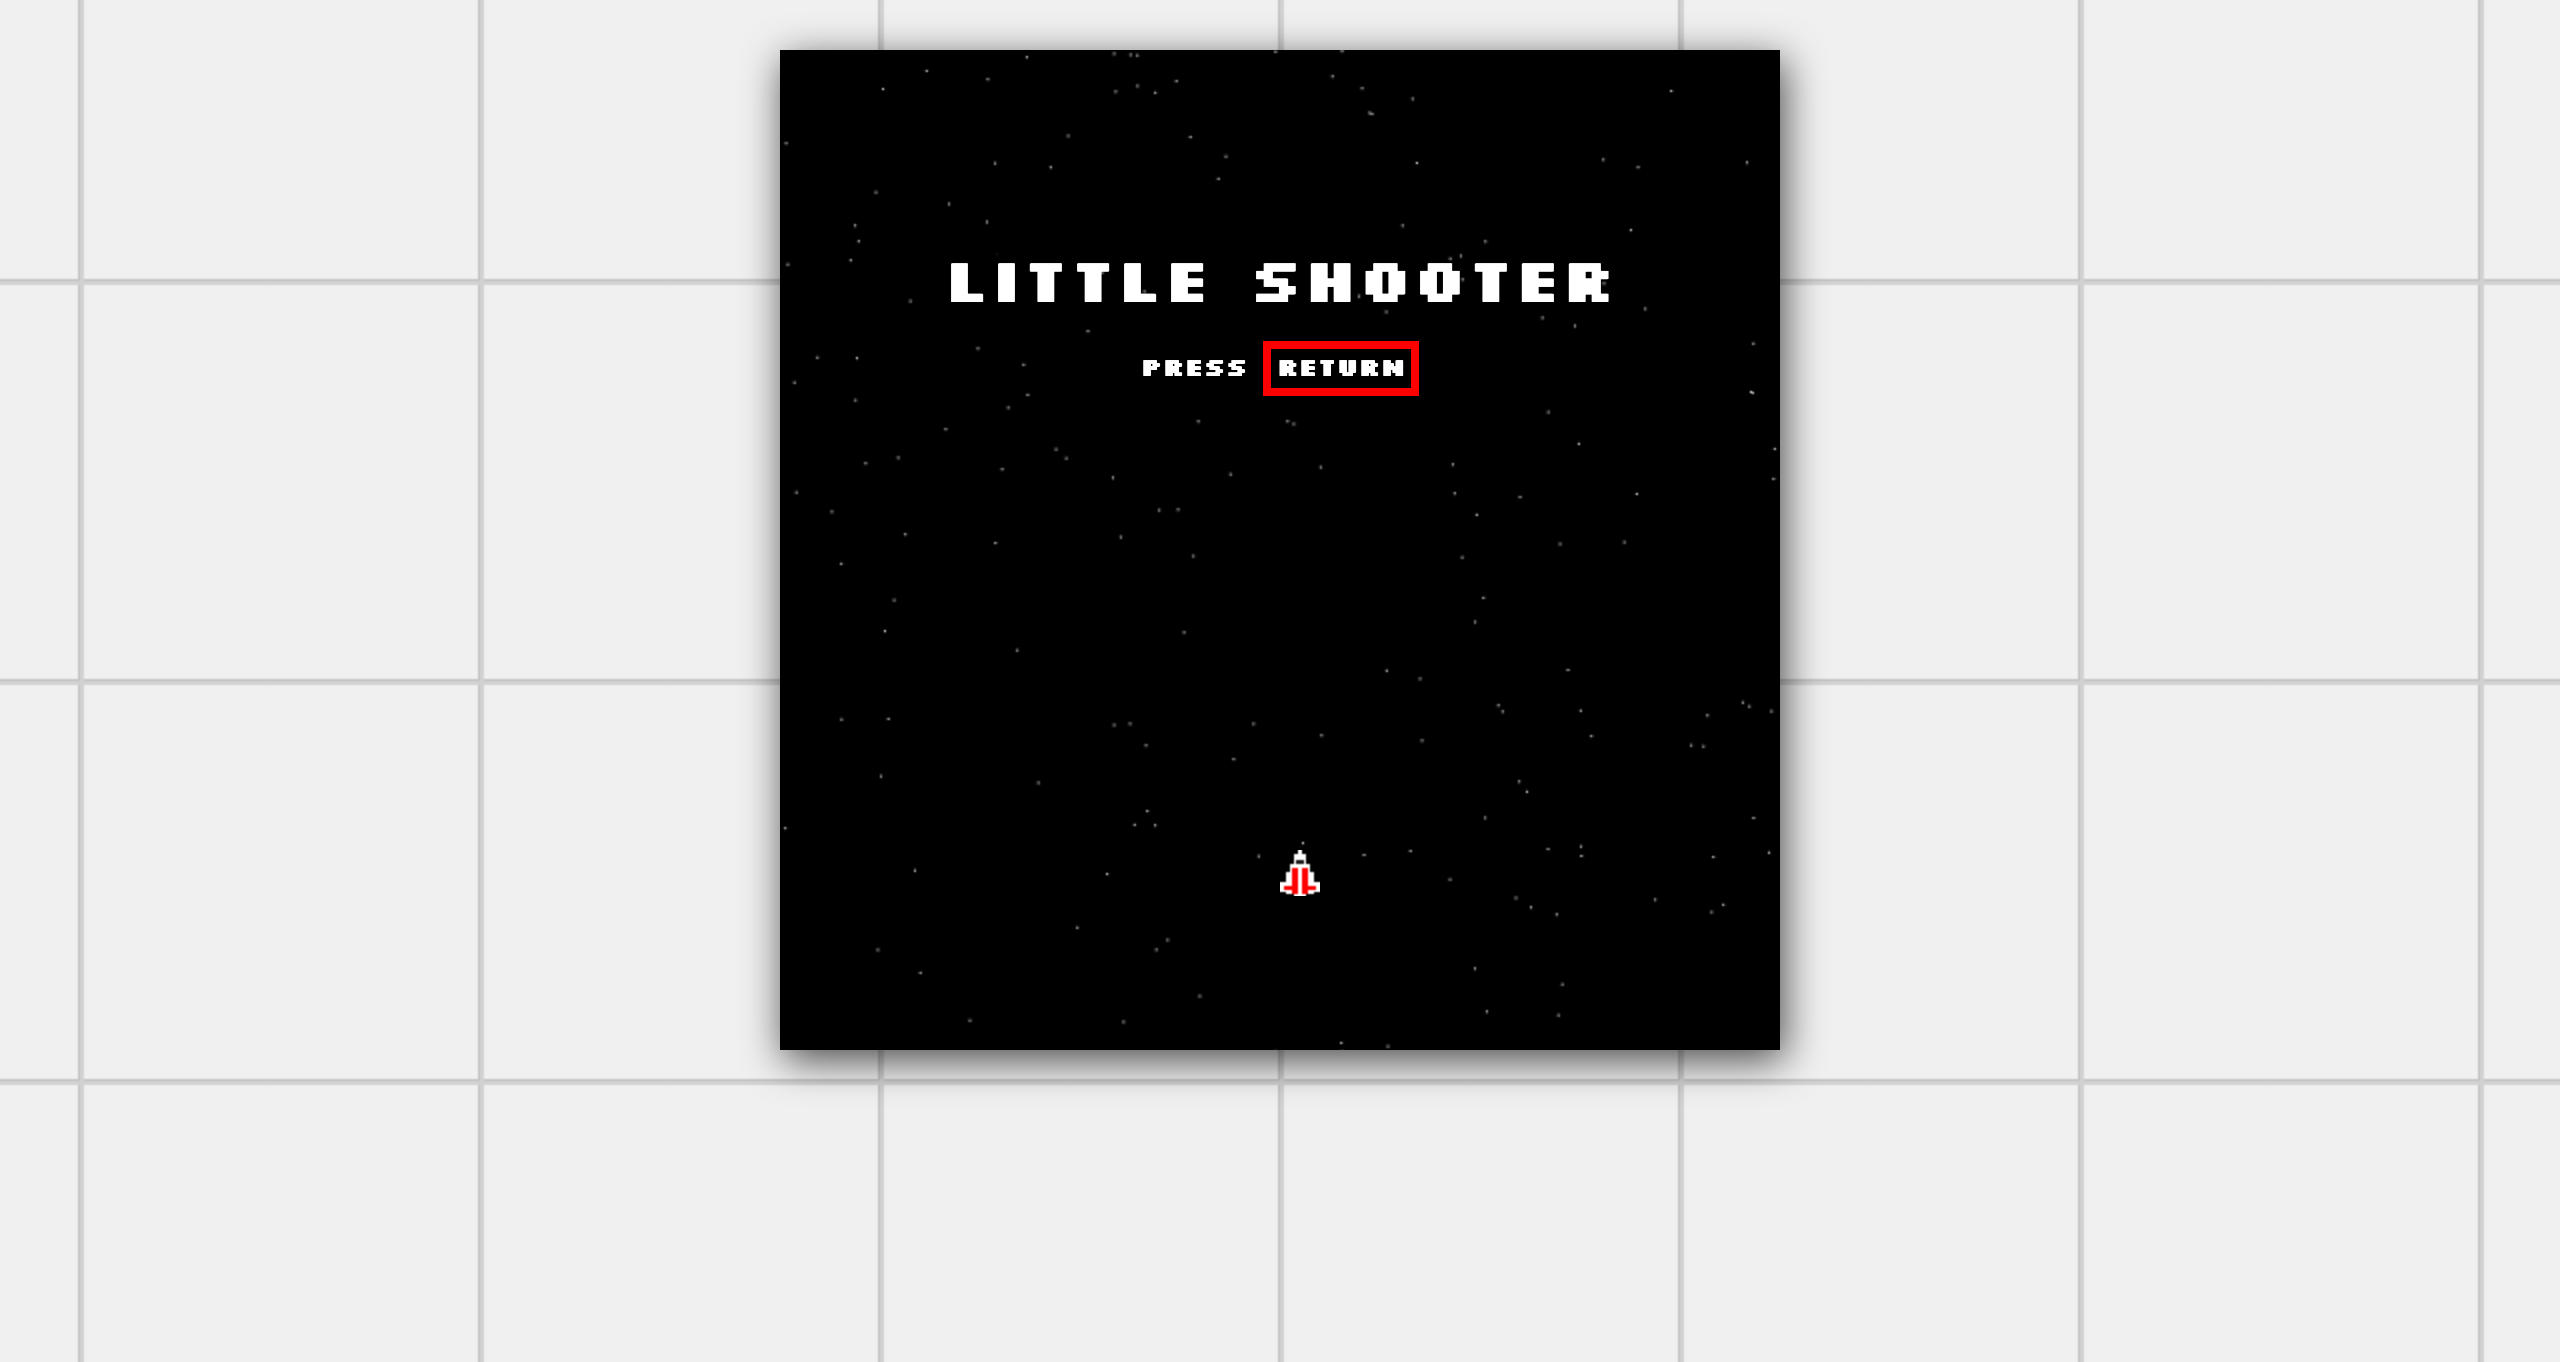 Little shooter 2 intro screen